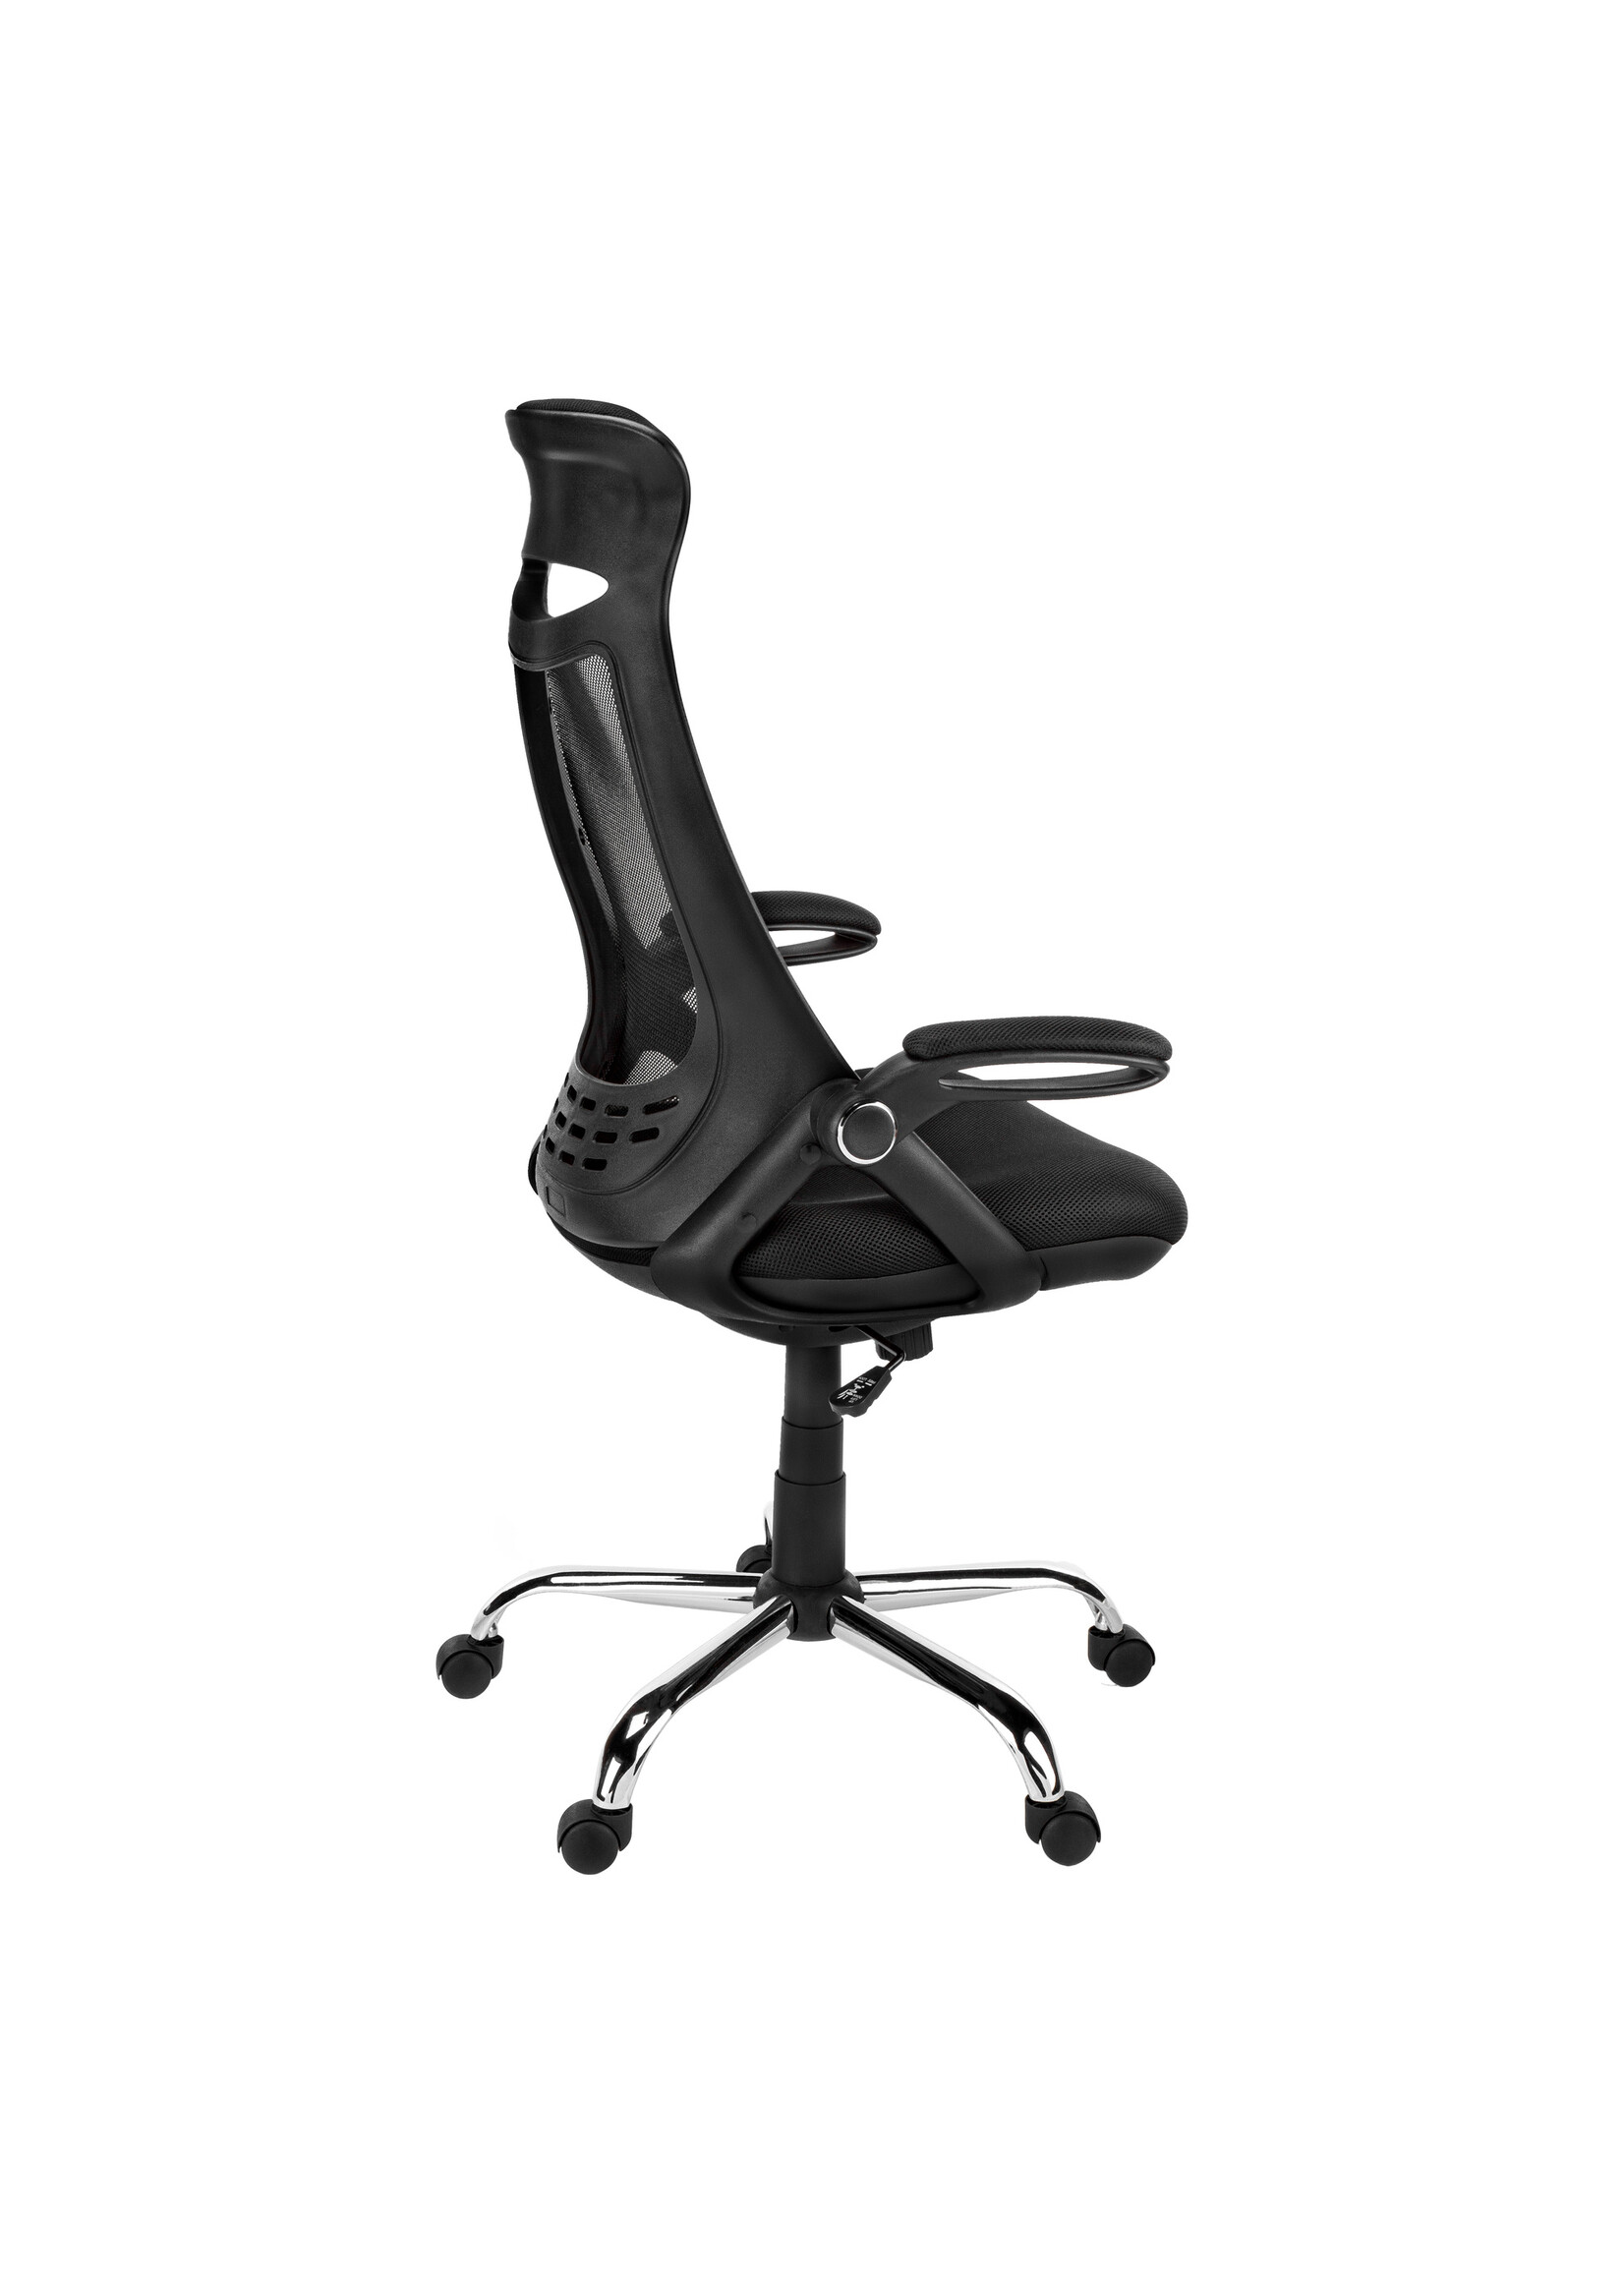 Executive Office Chair - Black Mesh Chrome High-Back